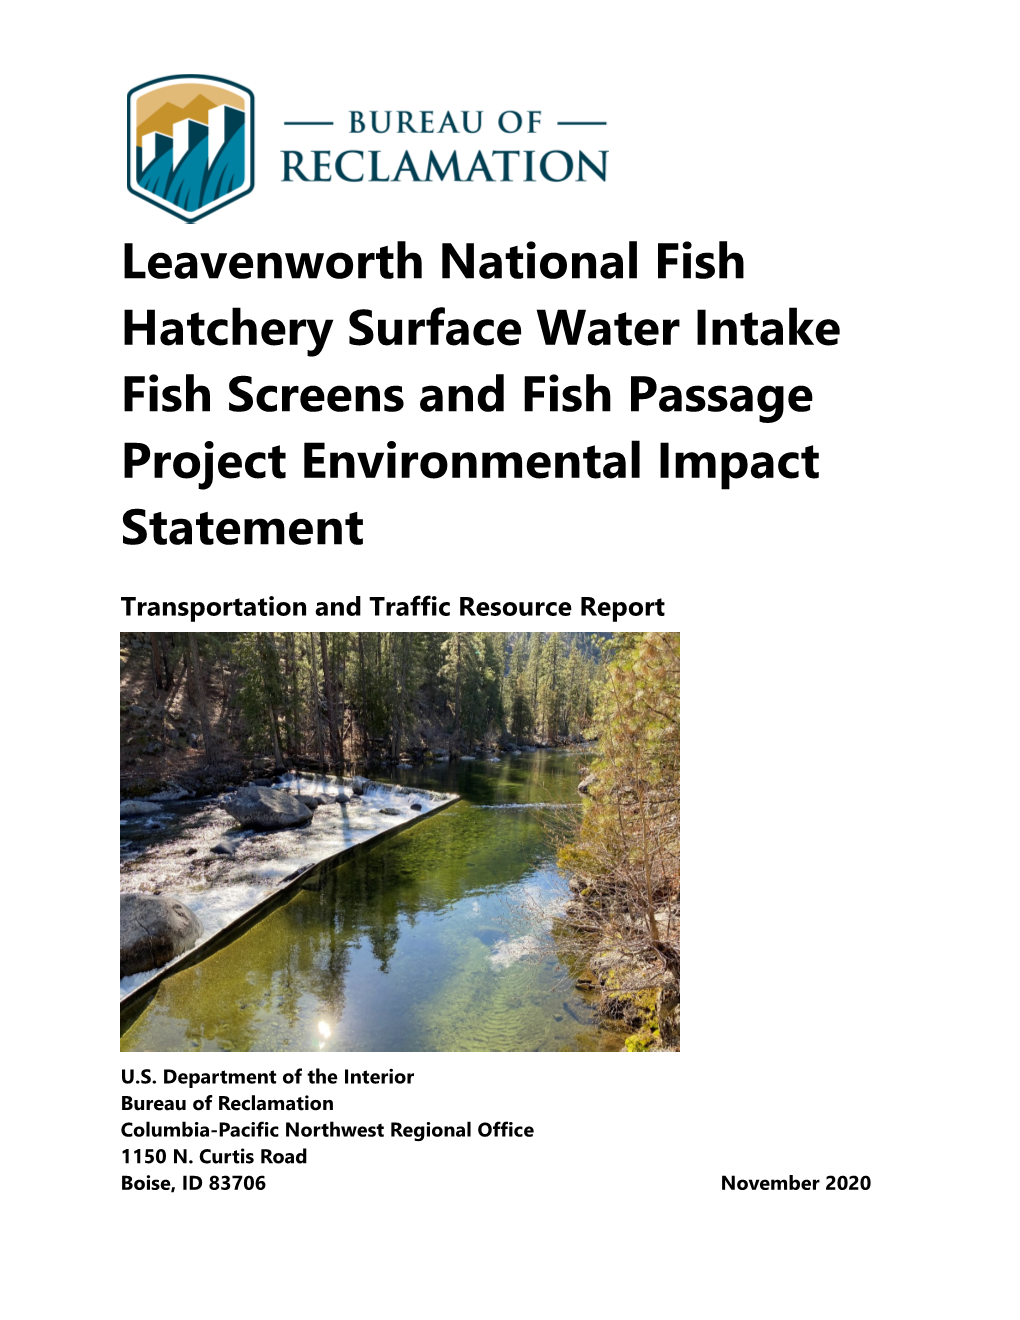 Leavenworth National Fish Hatchery Surface Water Intake Fish Screens and Fish Passage Project Environmental Impact Statement